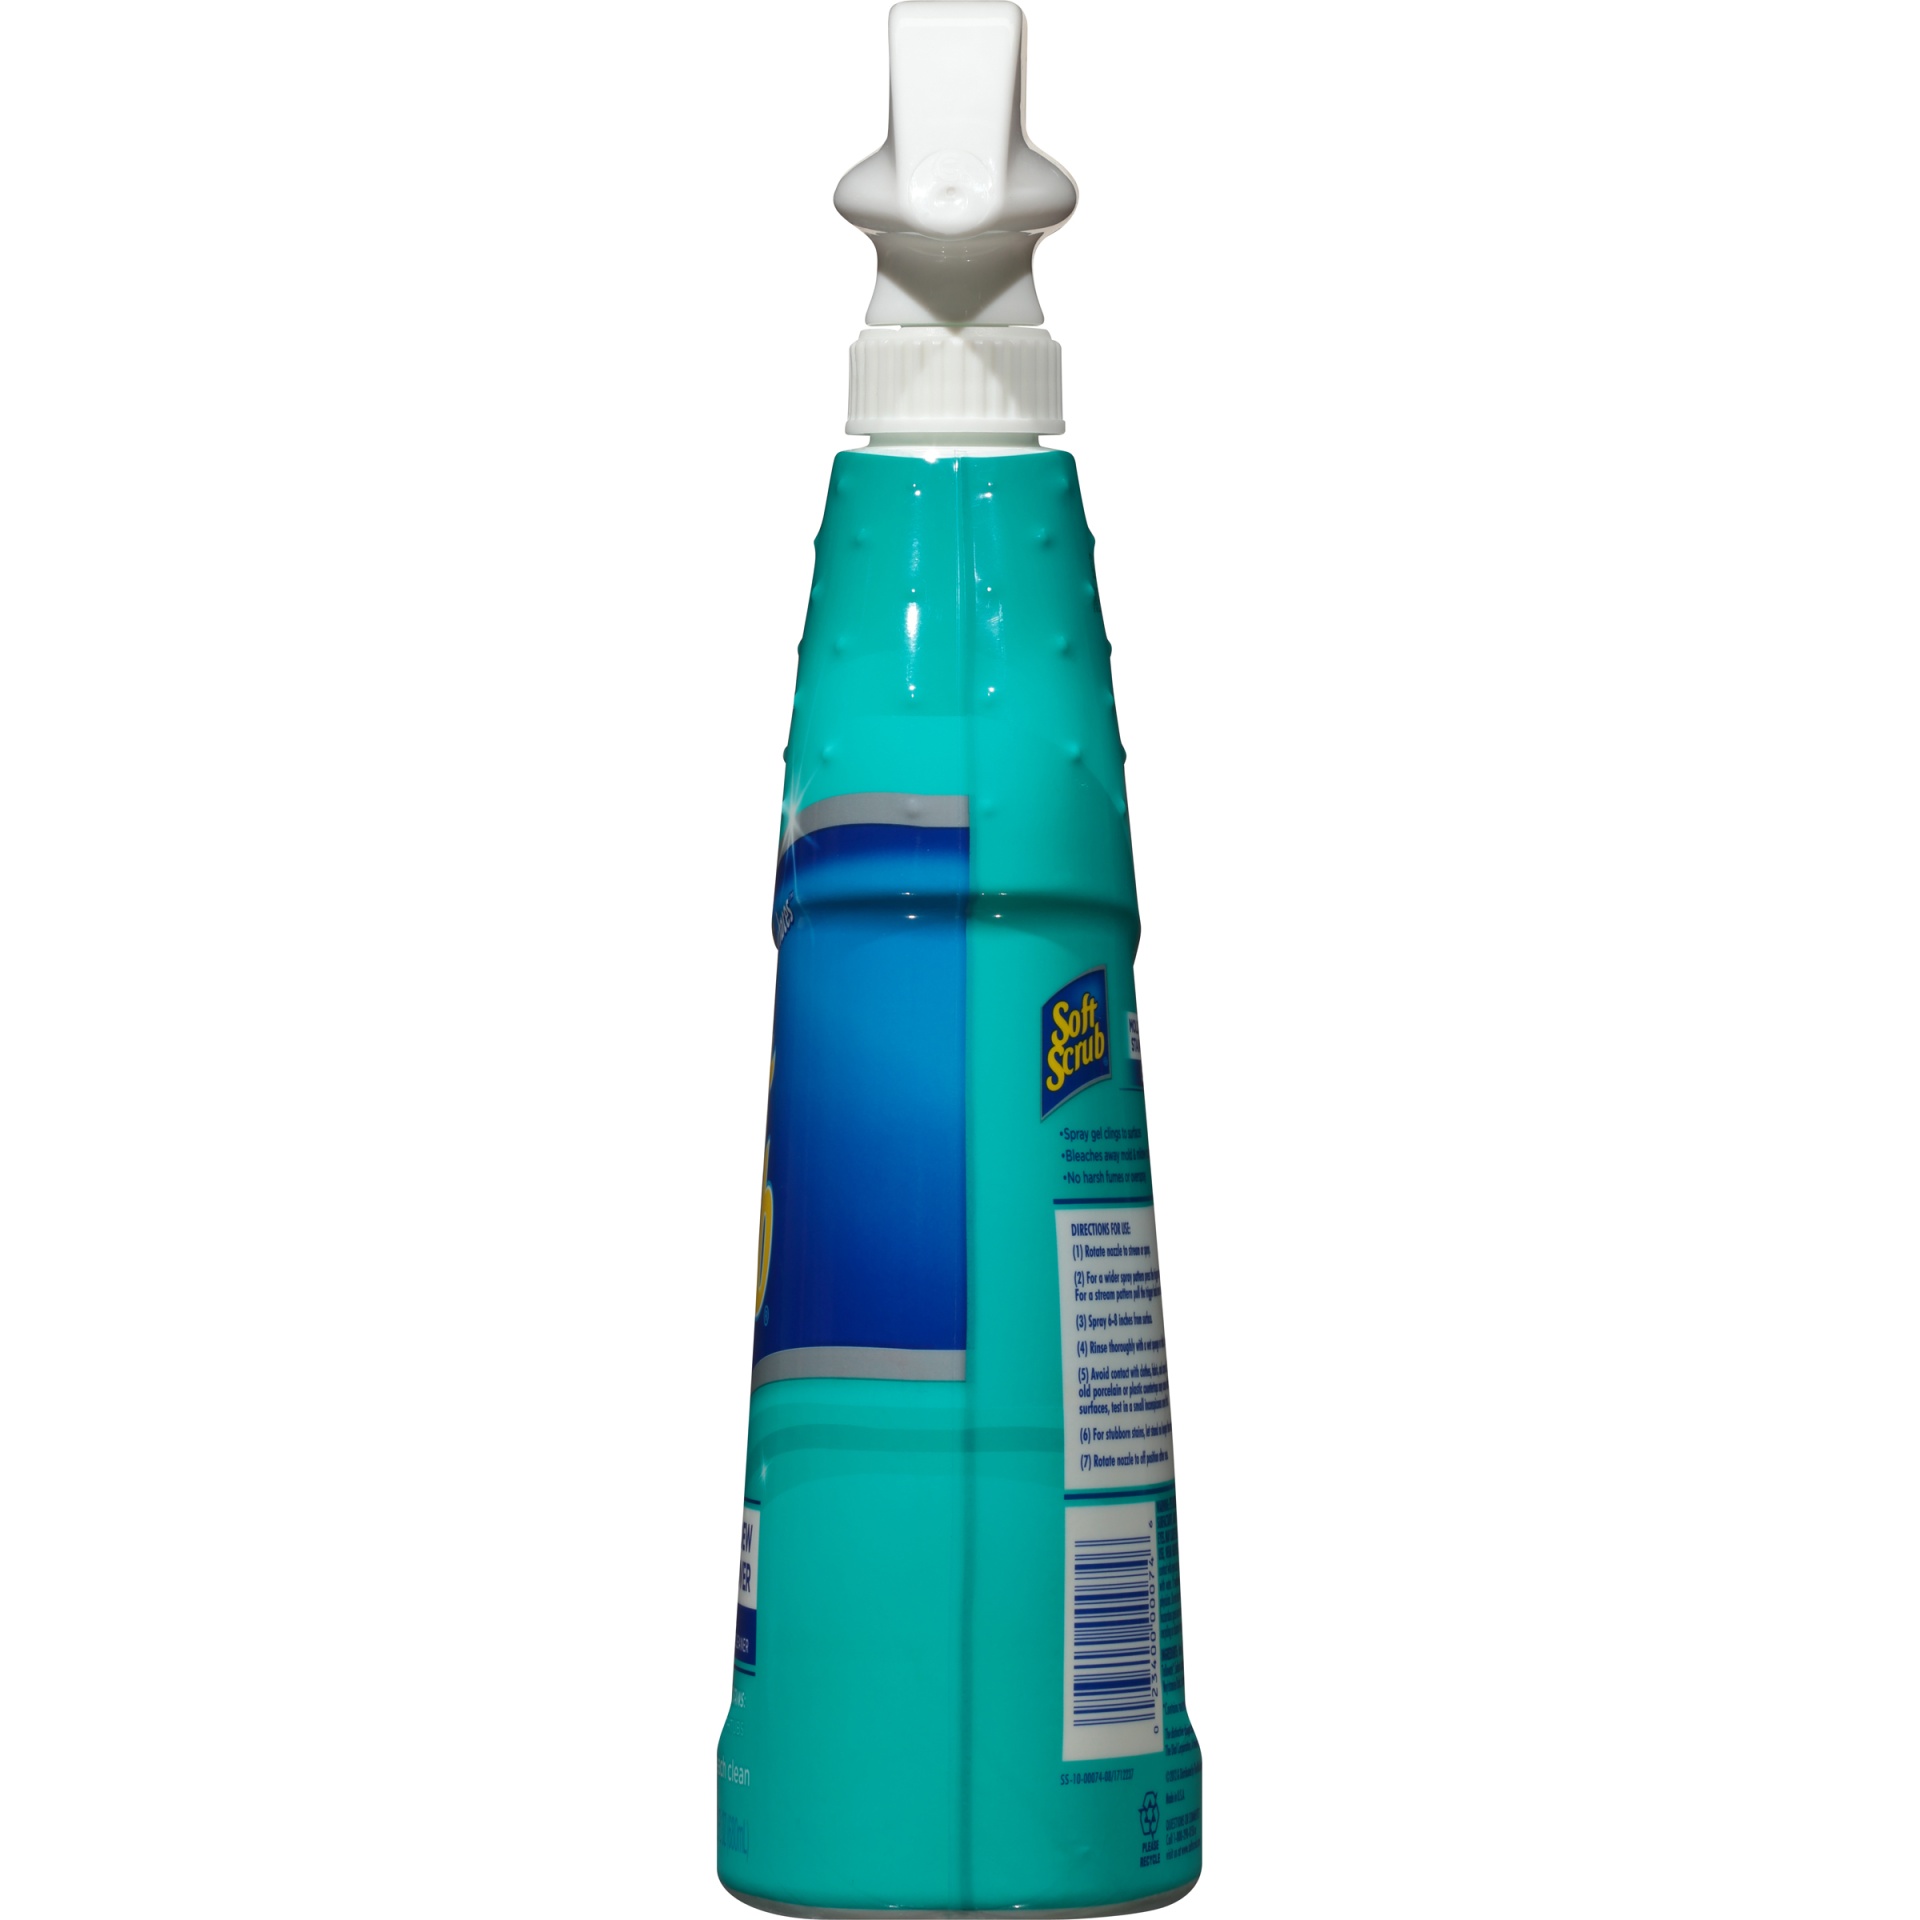 Soft Scrub Bleach Clean Gel Cleanser Trigger Spray